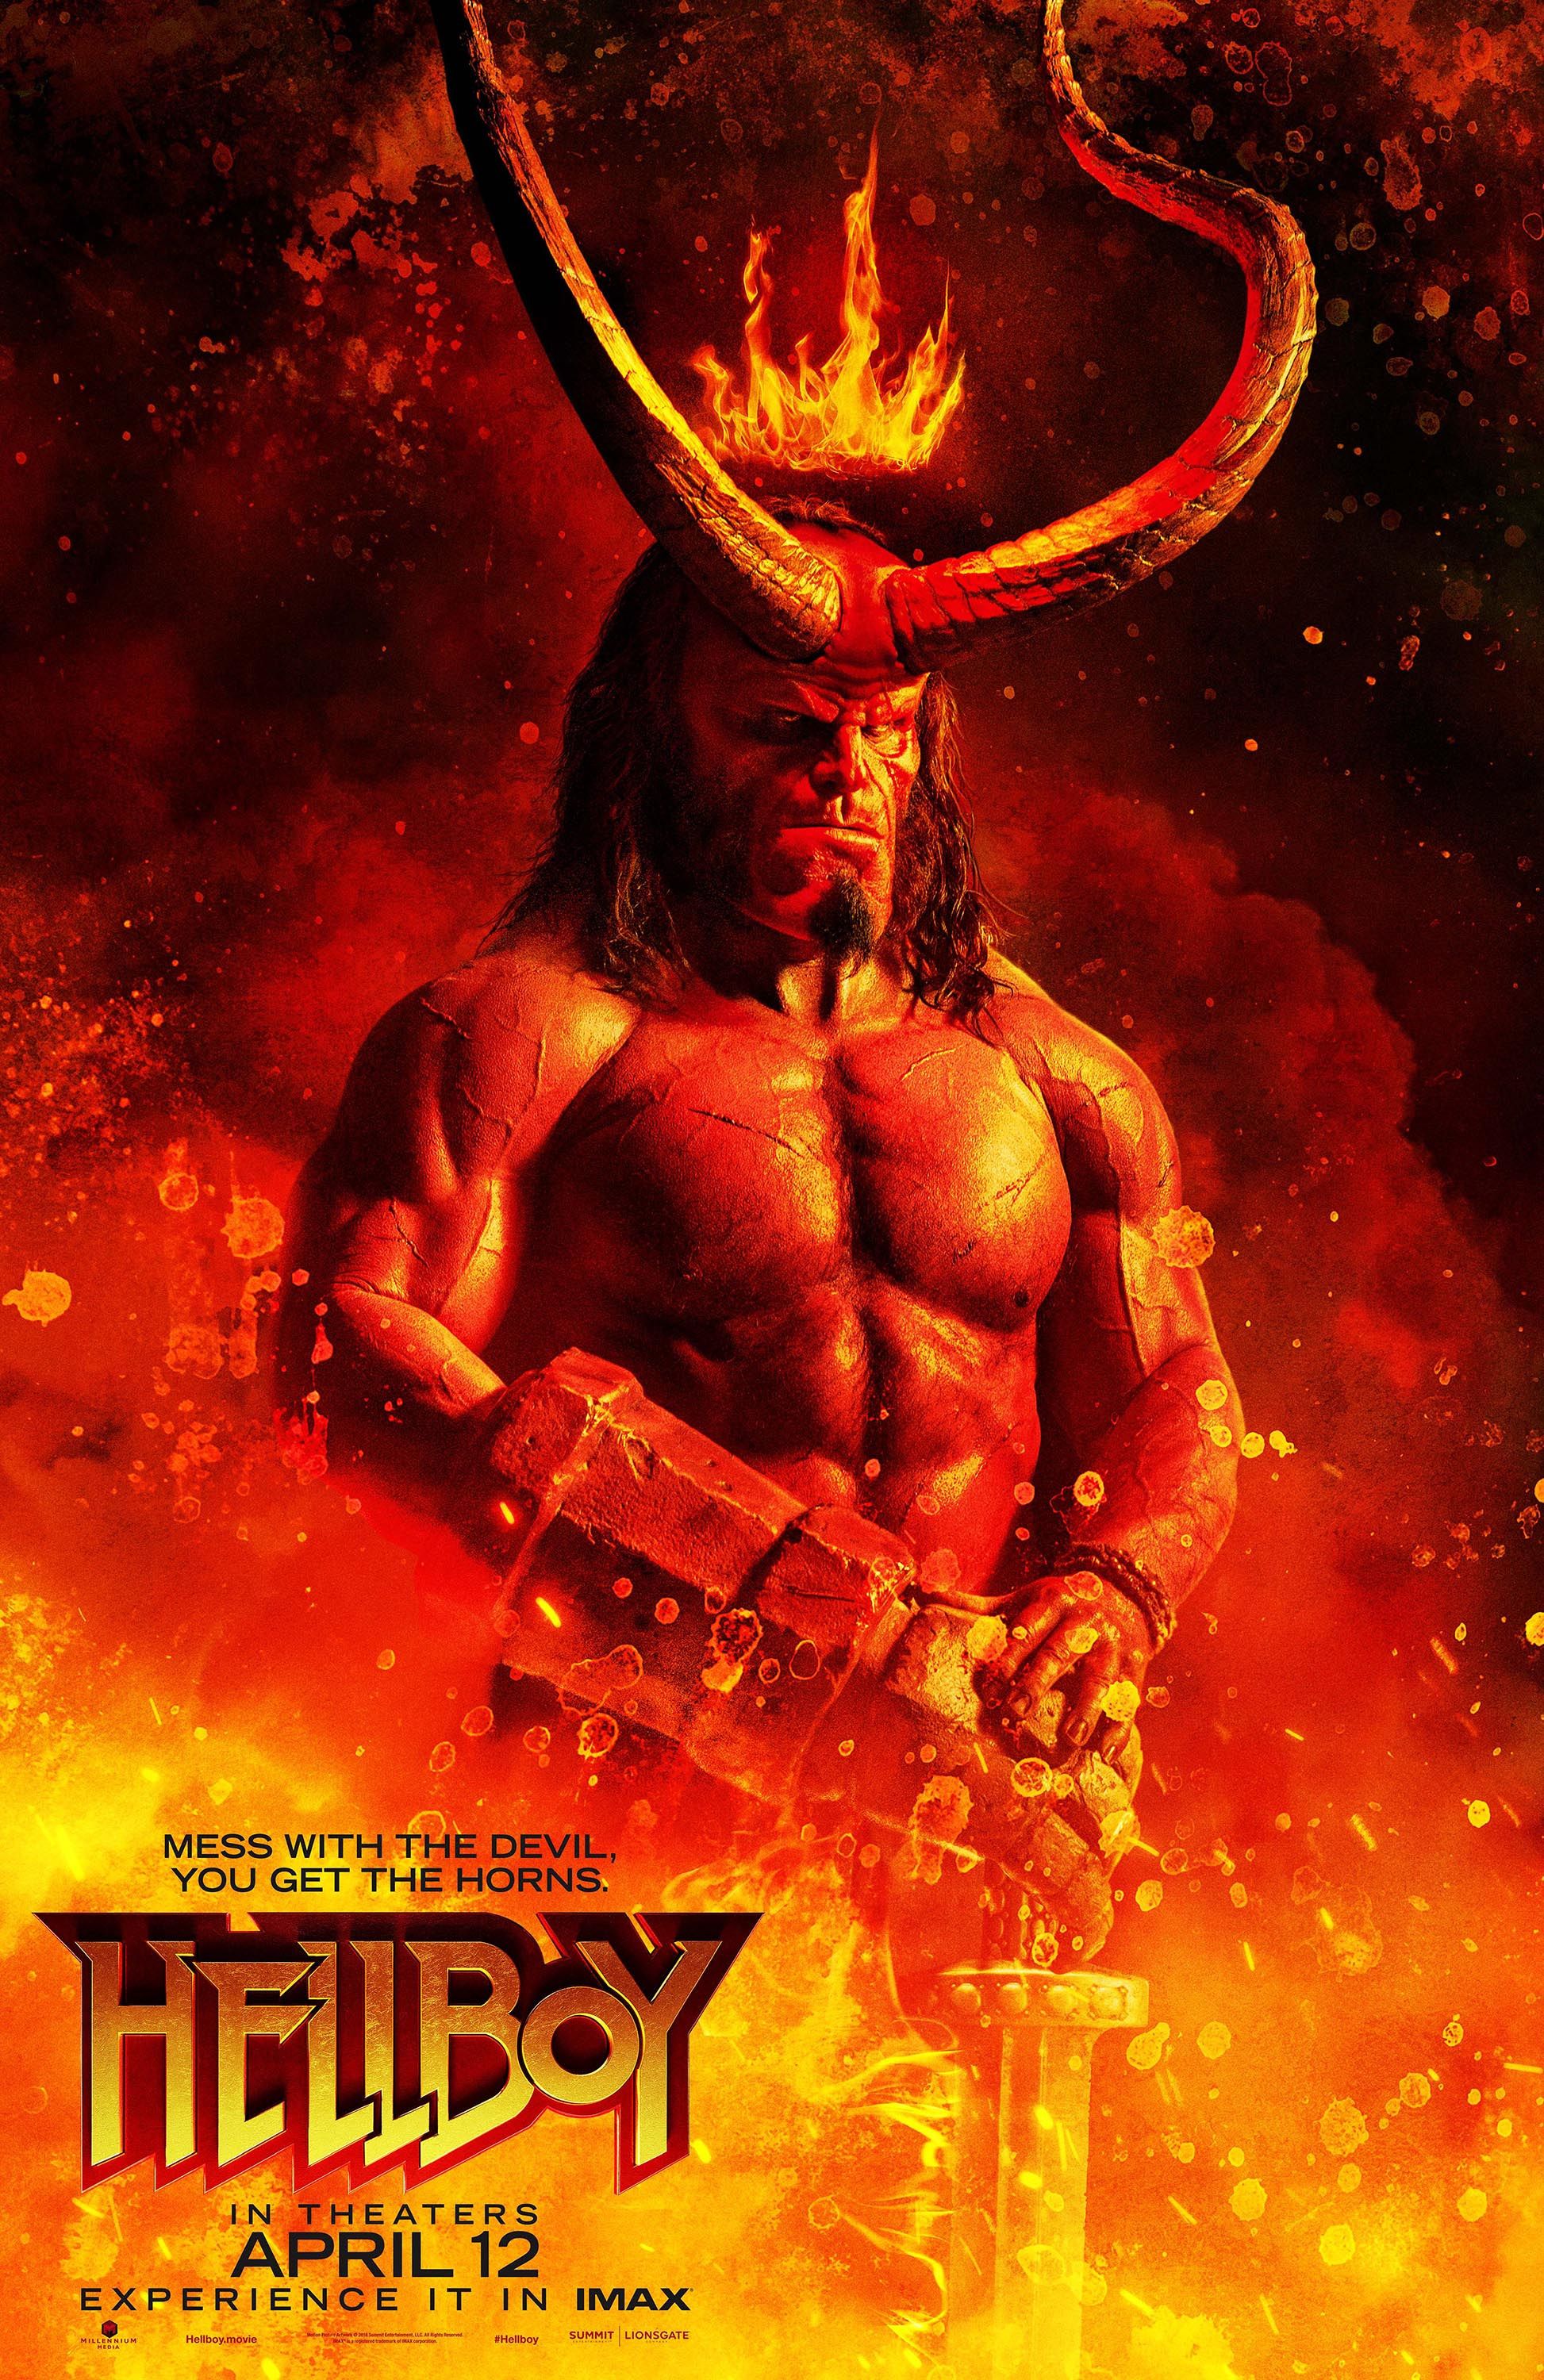 Stiahni si Filmy bez titulků Hellboy (2019)[HDRip][720p] = CSFD 58%